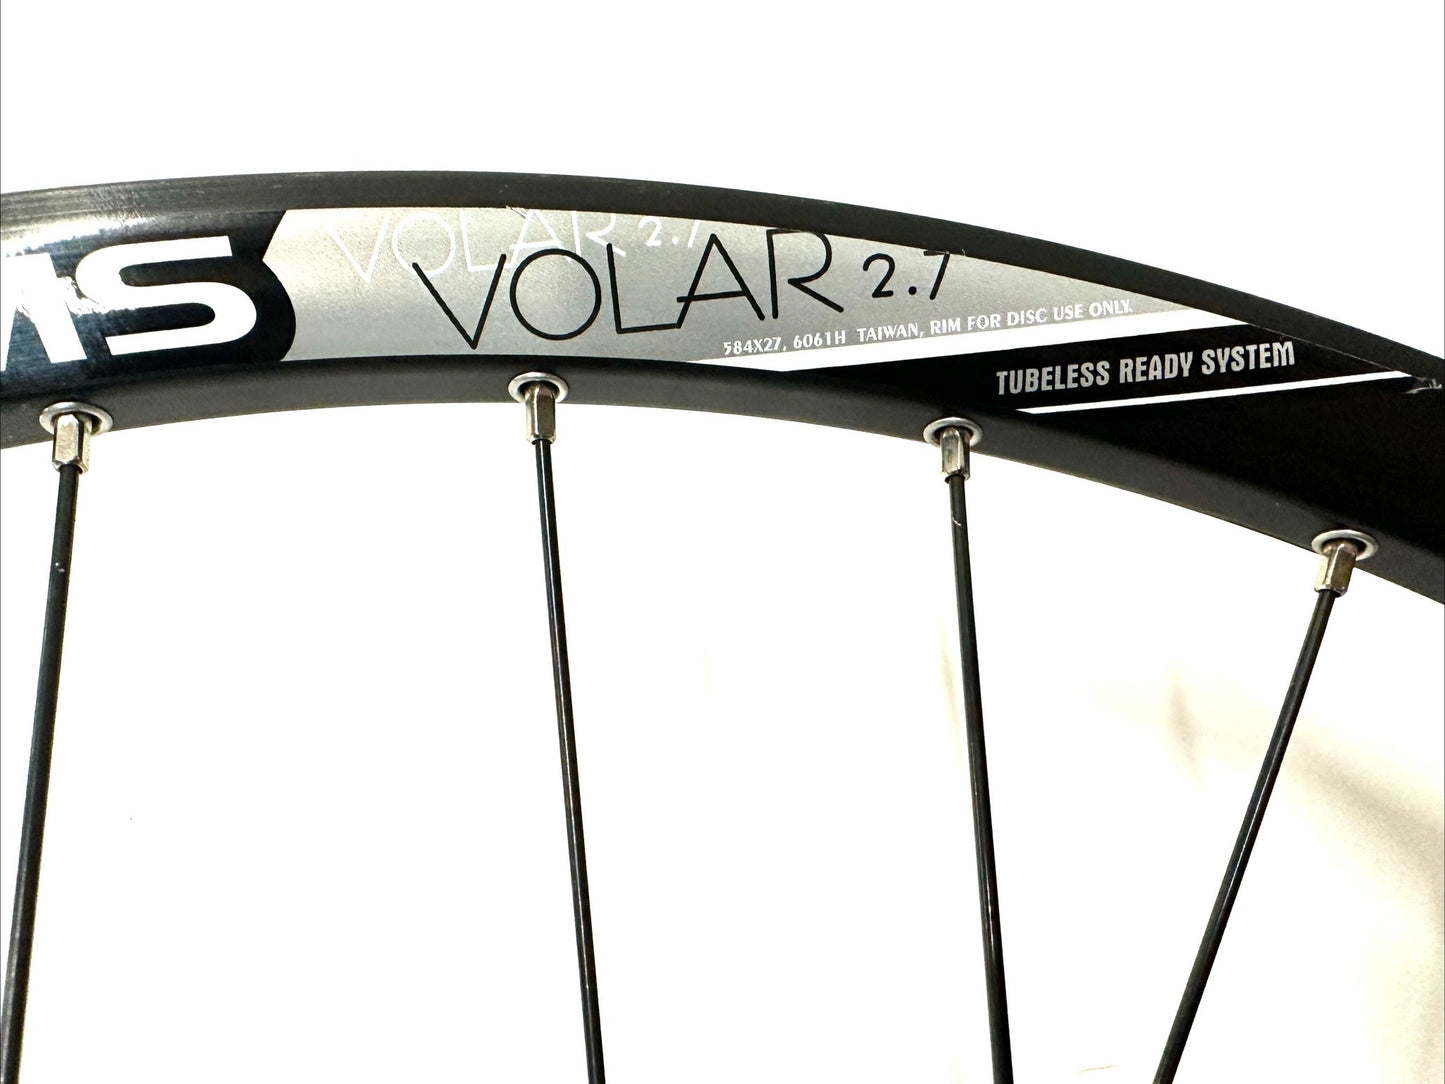 Alexrims Volar 2.7 27.5" 148mm x 12mm Boost Rear HG 8-10 spd Disc 32h Wheel New - Random Bike Parts